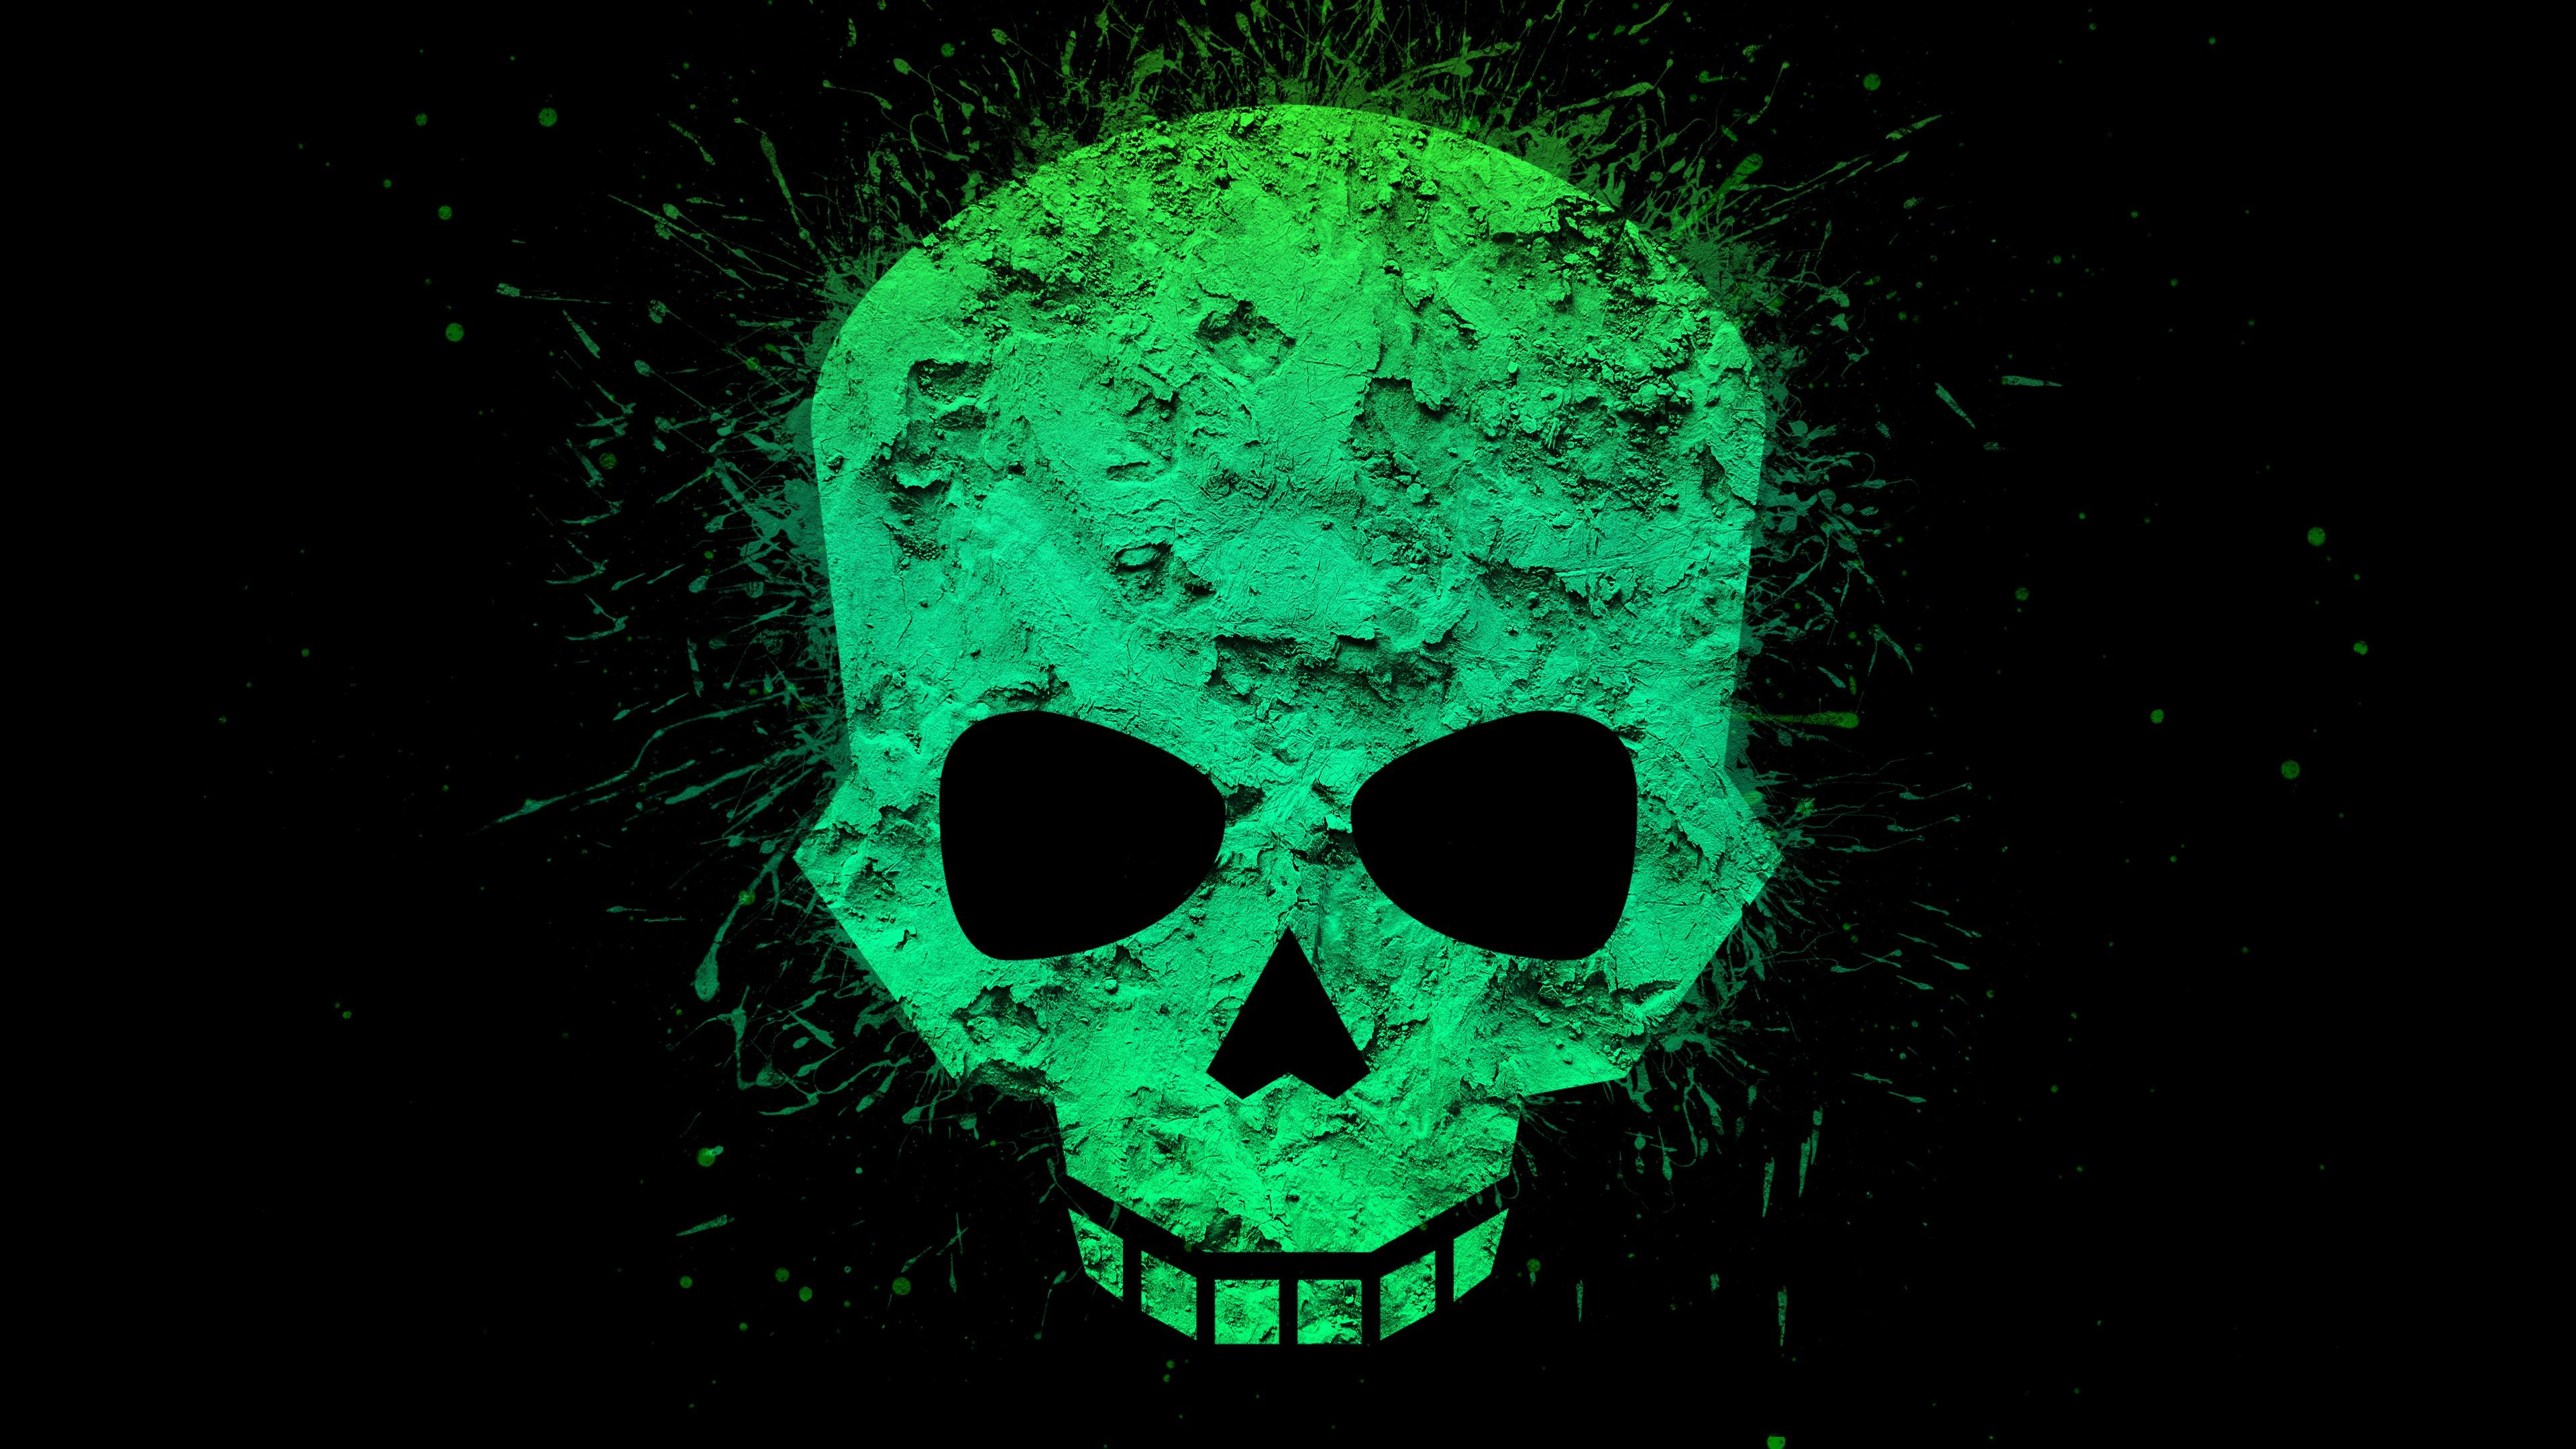 Green Skull 4k, HD Artist, 4k Wallpaper, Image, Background